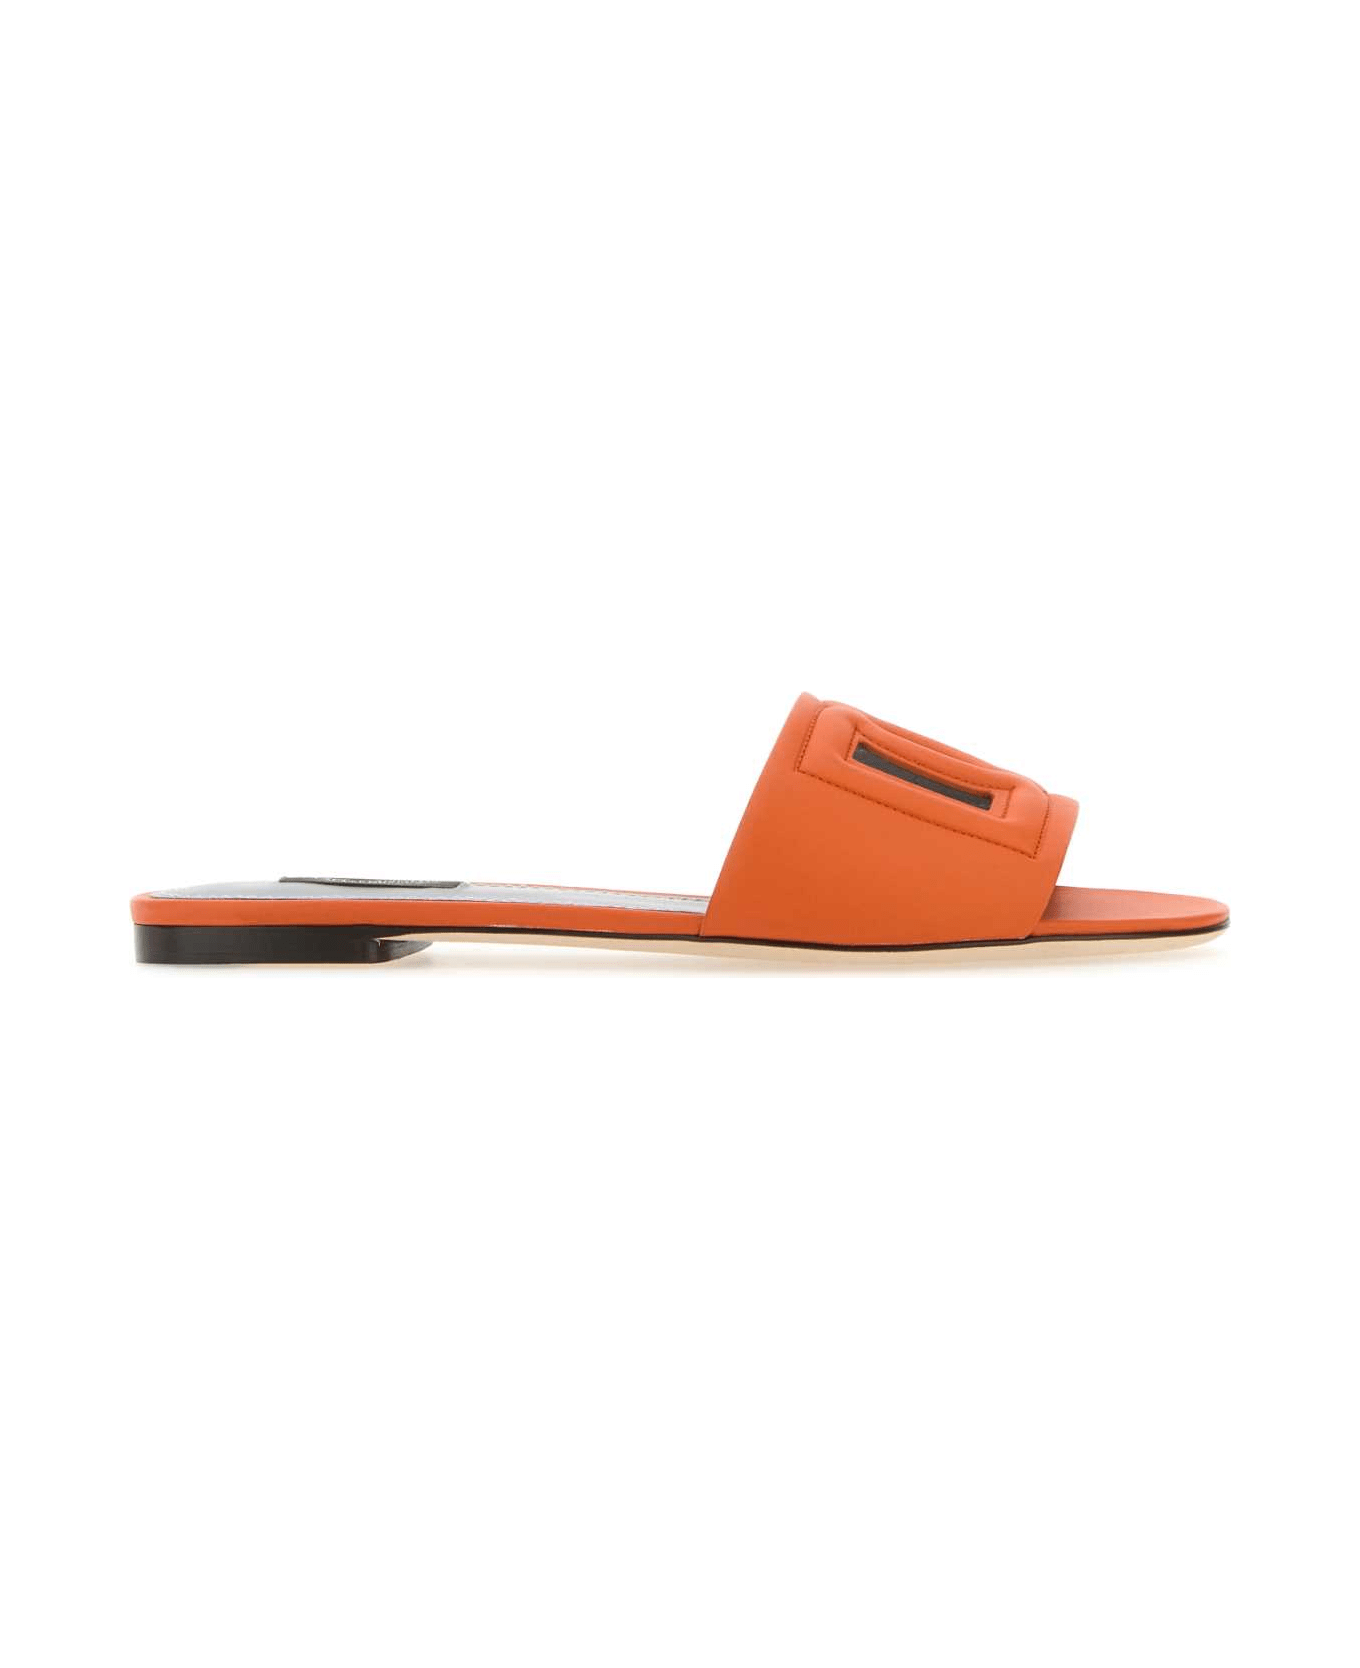 Dolce & Gabbana Orange Leather Dg Slippers - 80244 サンダル